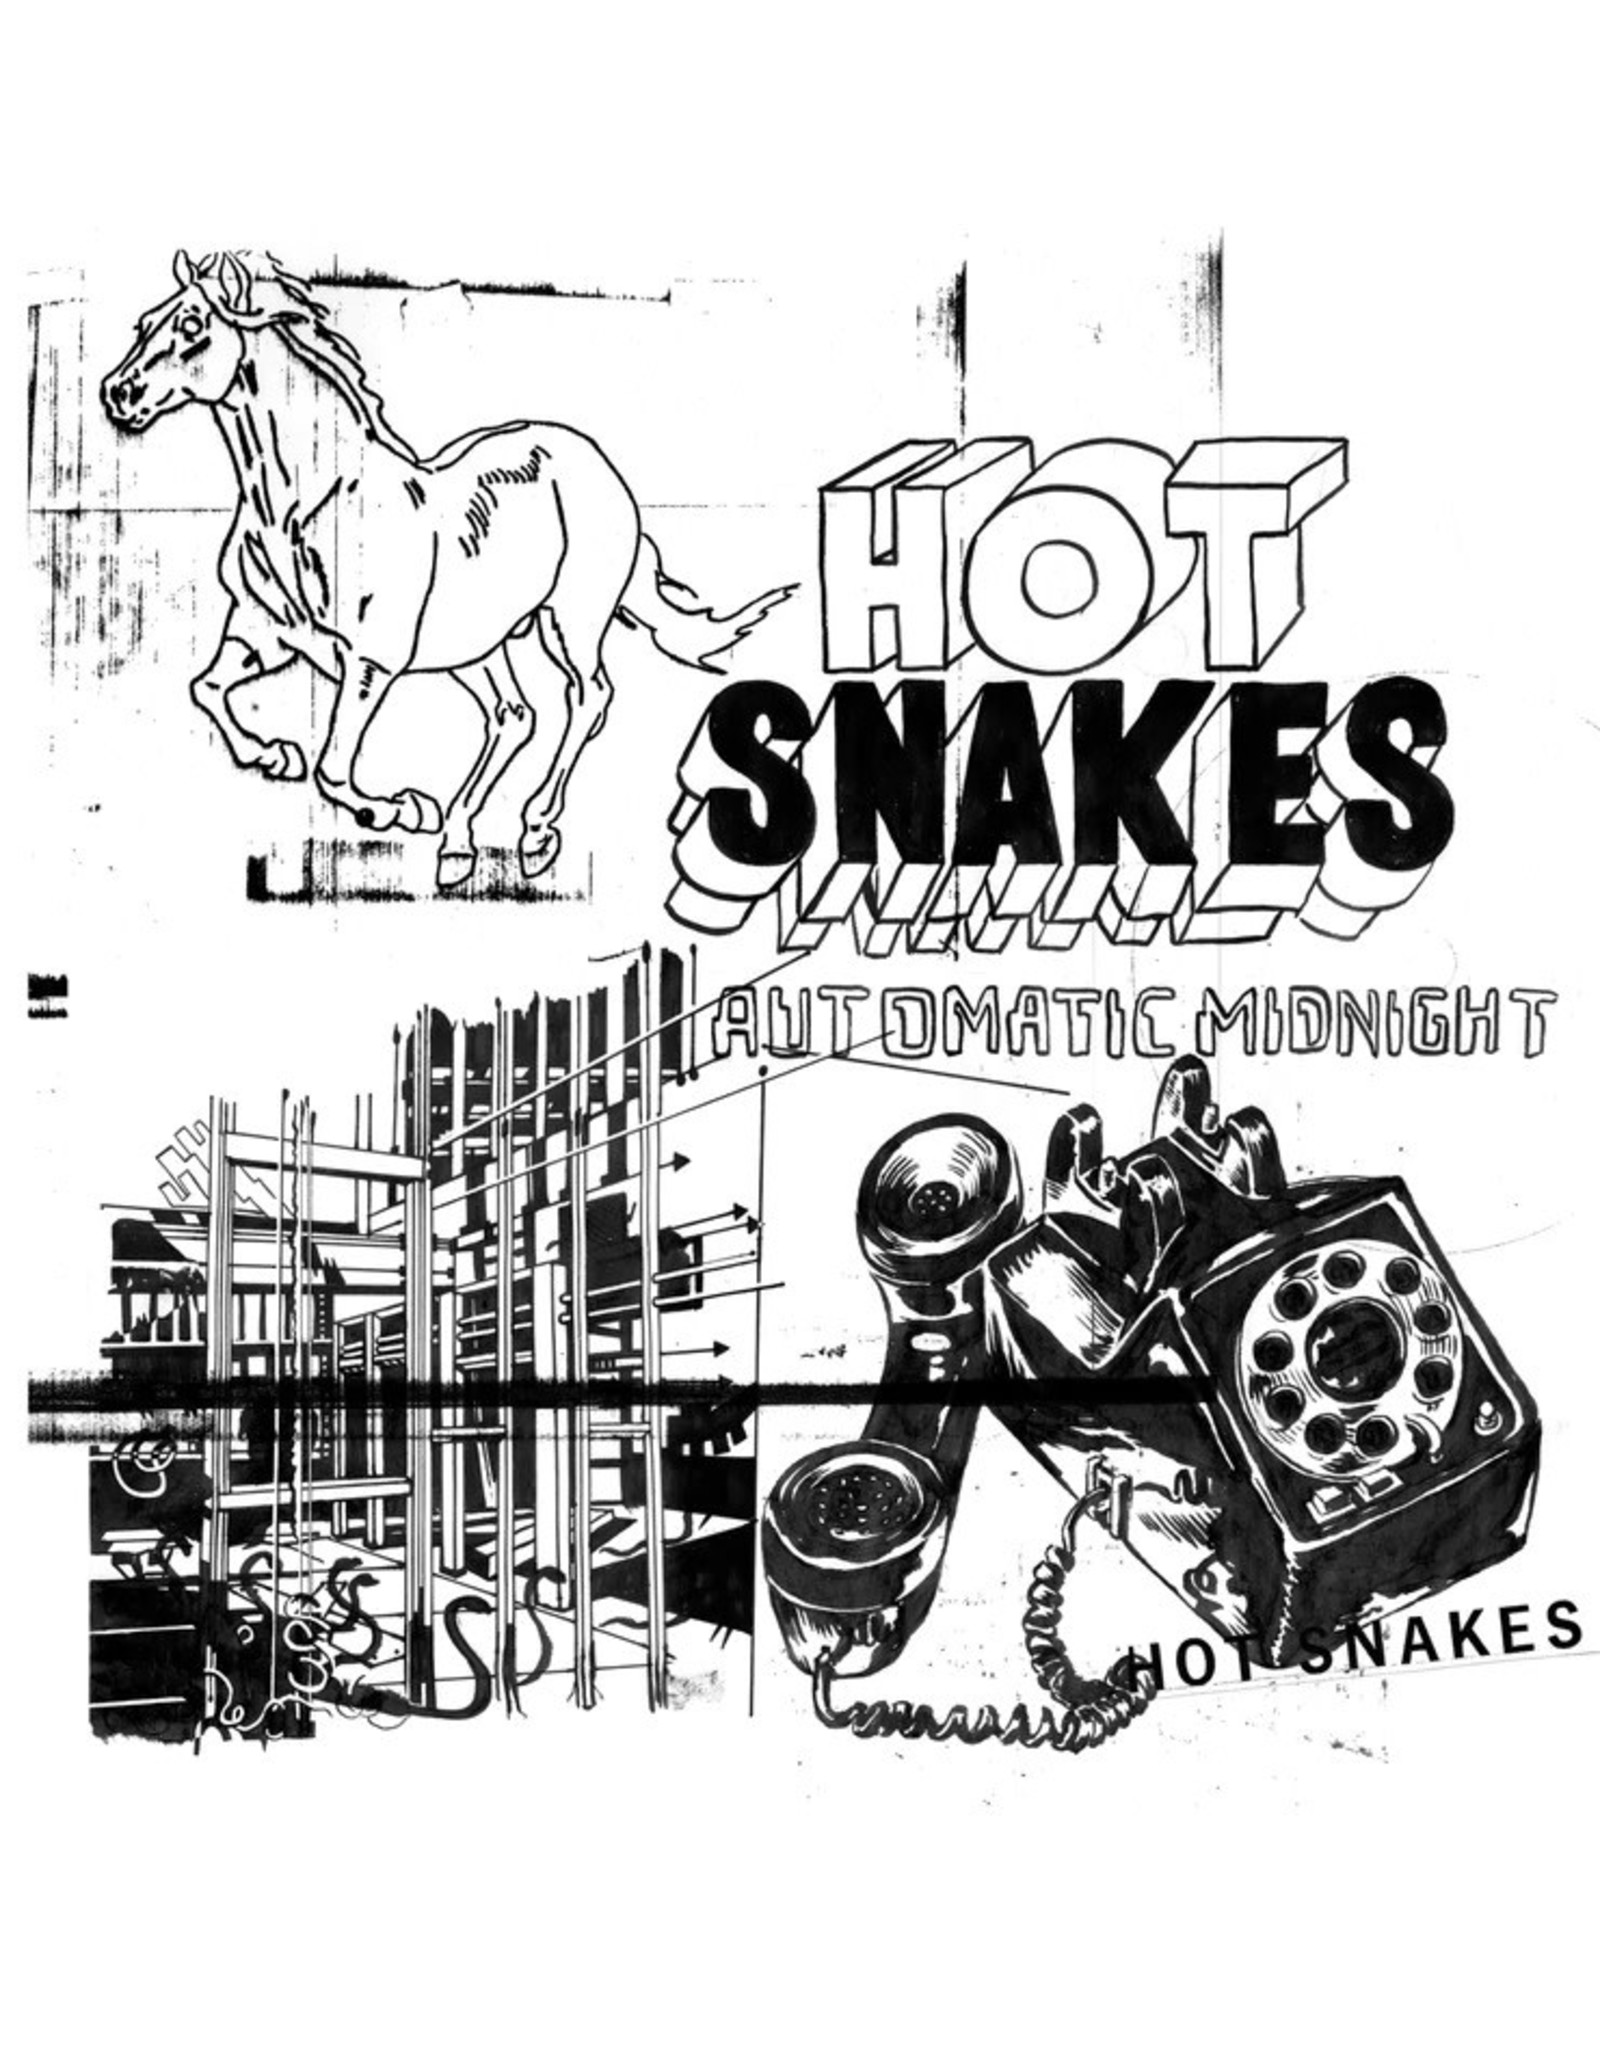 Sub Pop Hot Snakes: Automatic Midnight LP